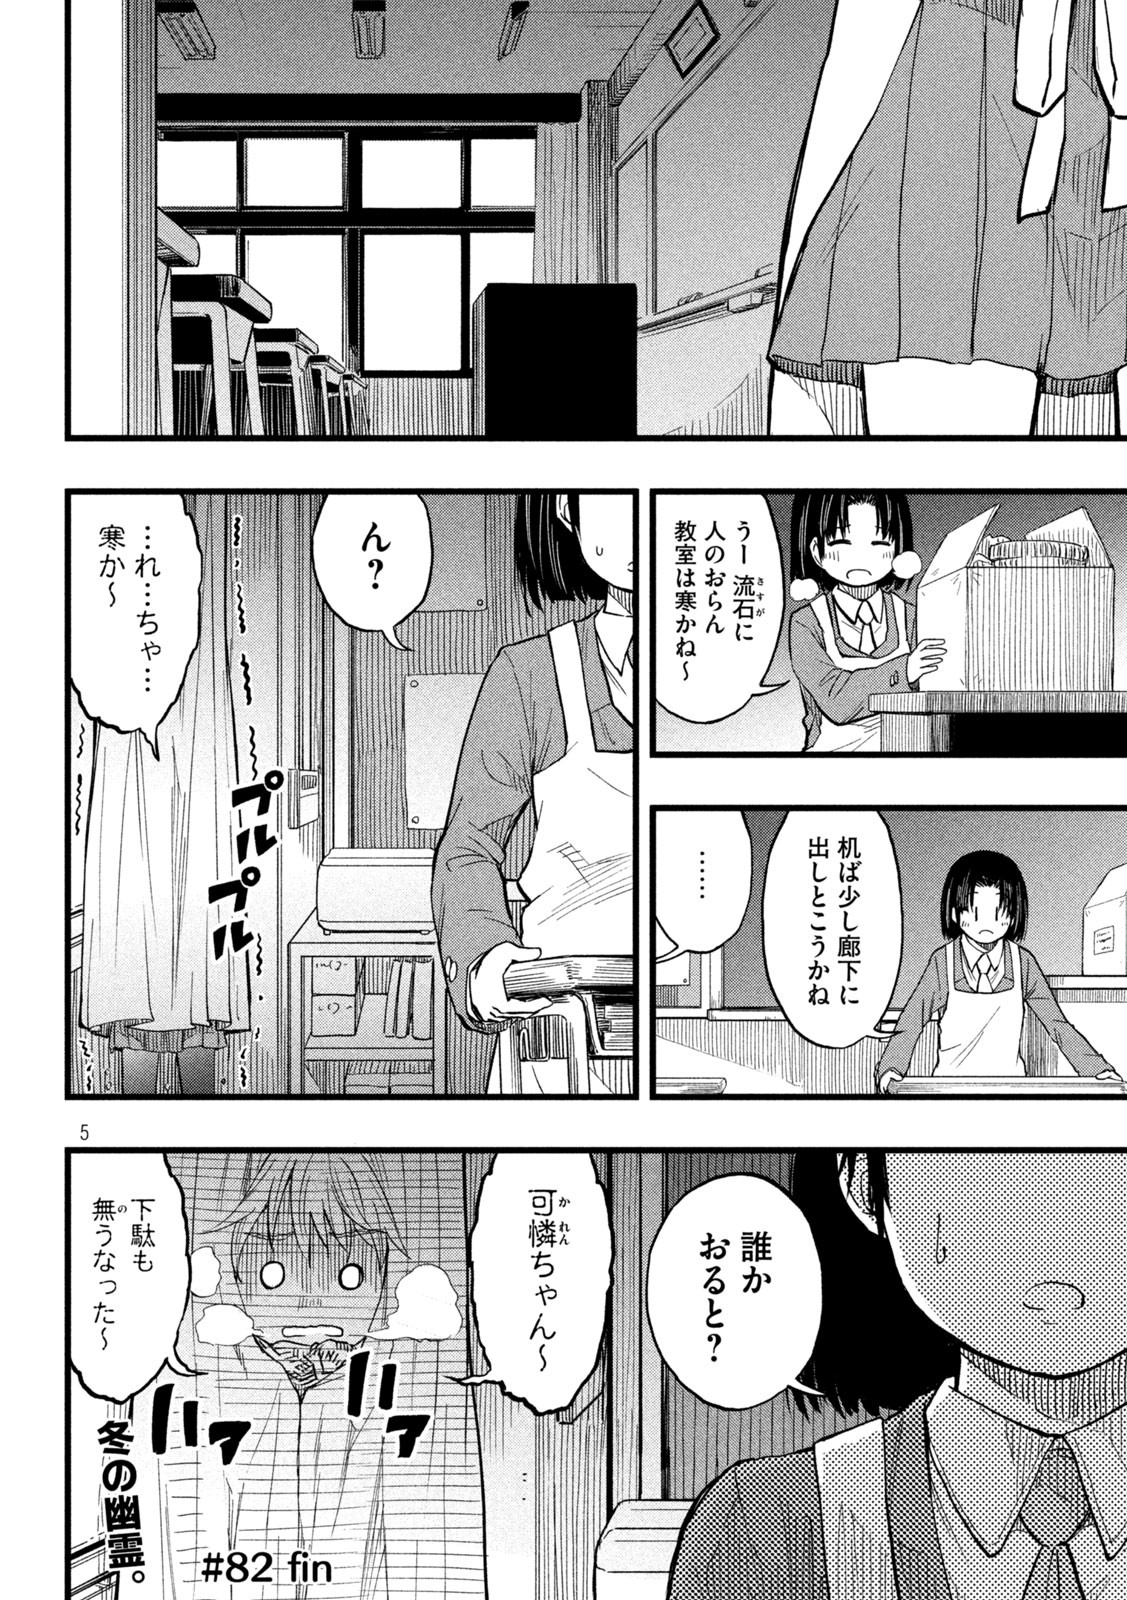 Koharu haru! - Chapter 82 - Page 5